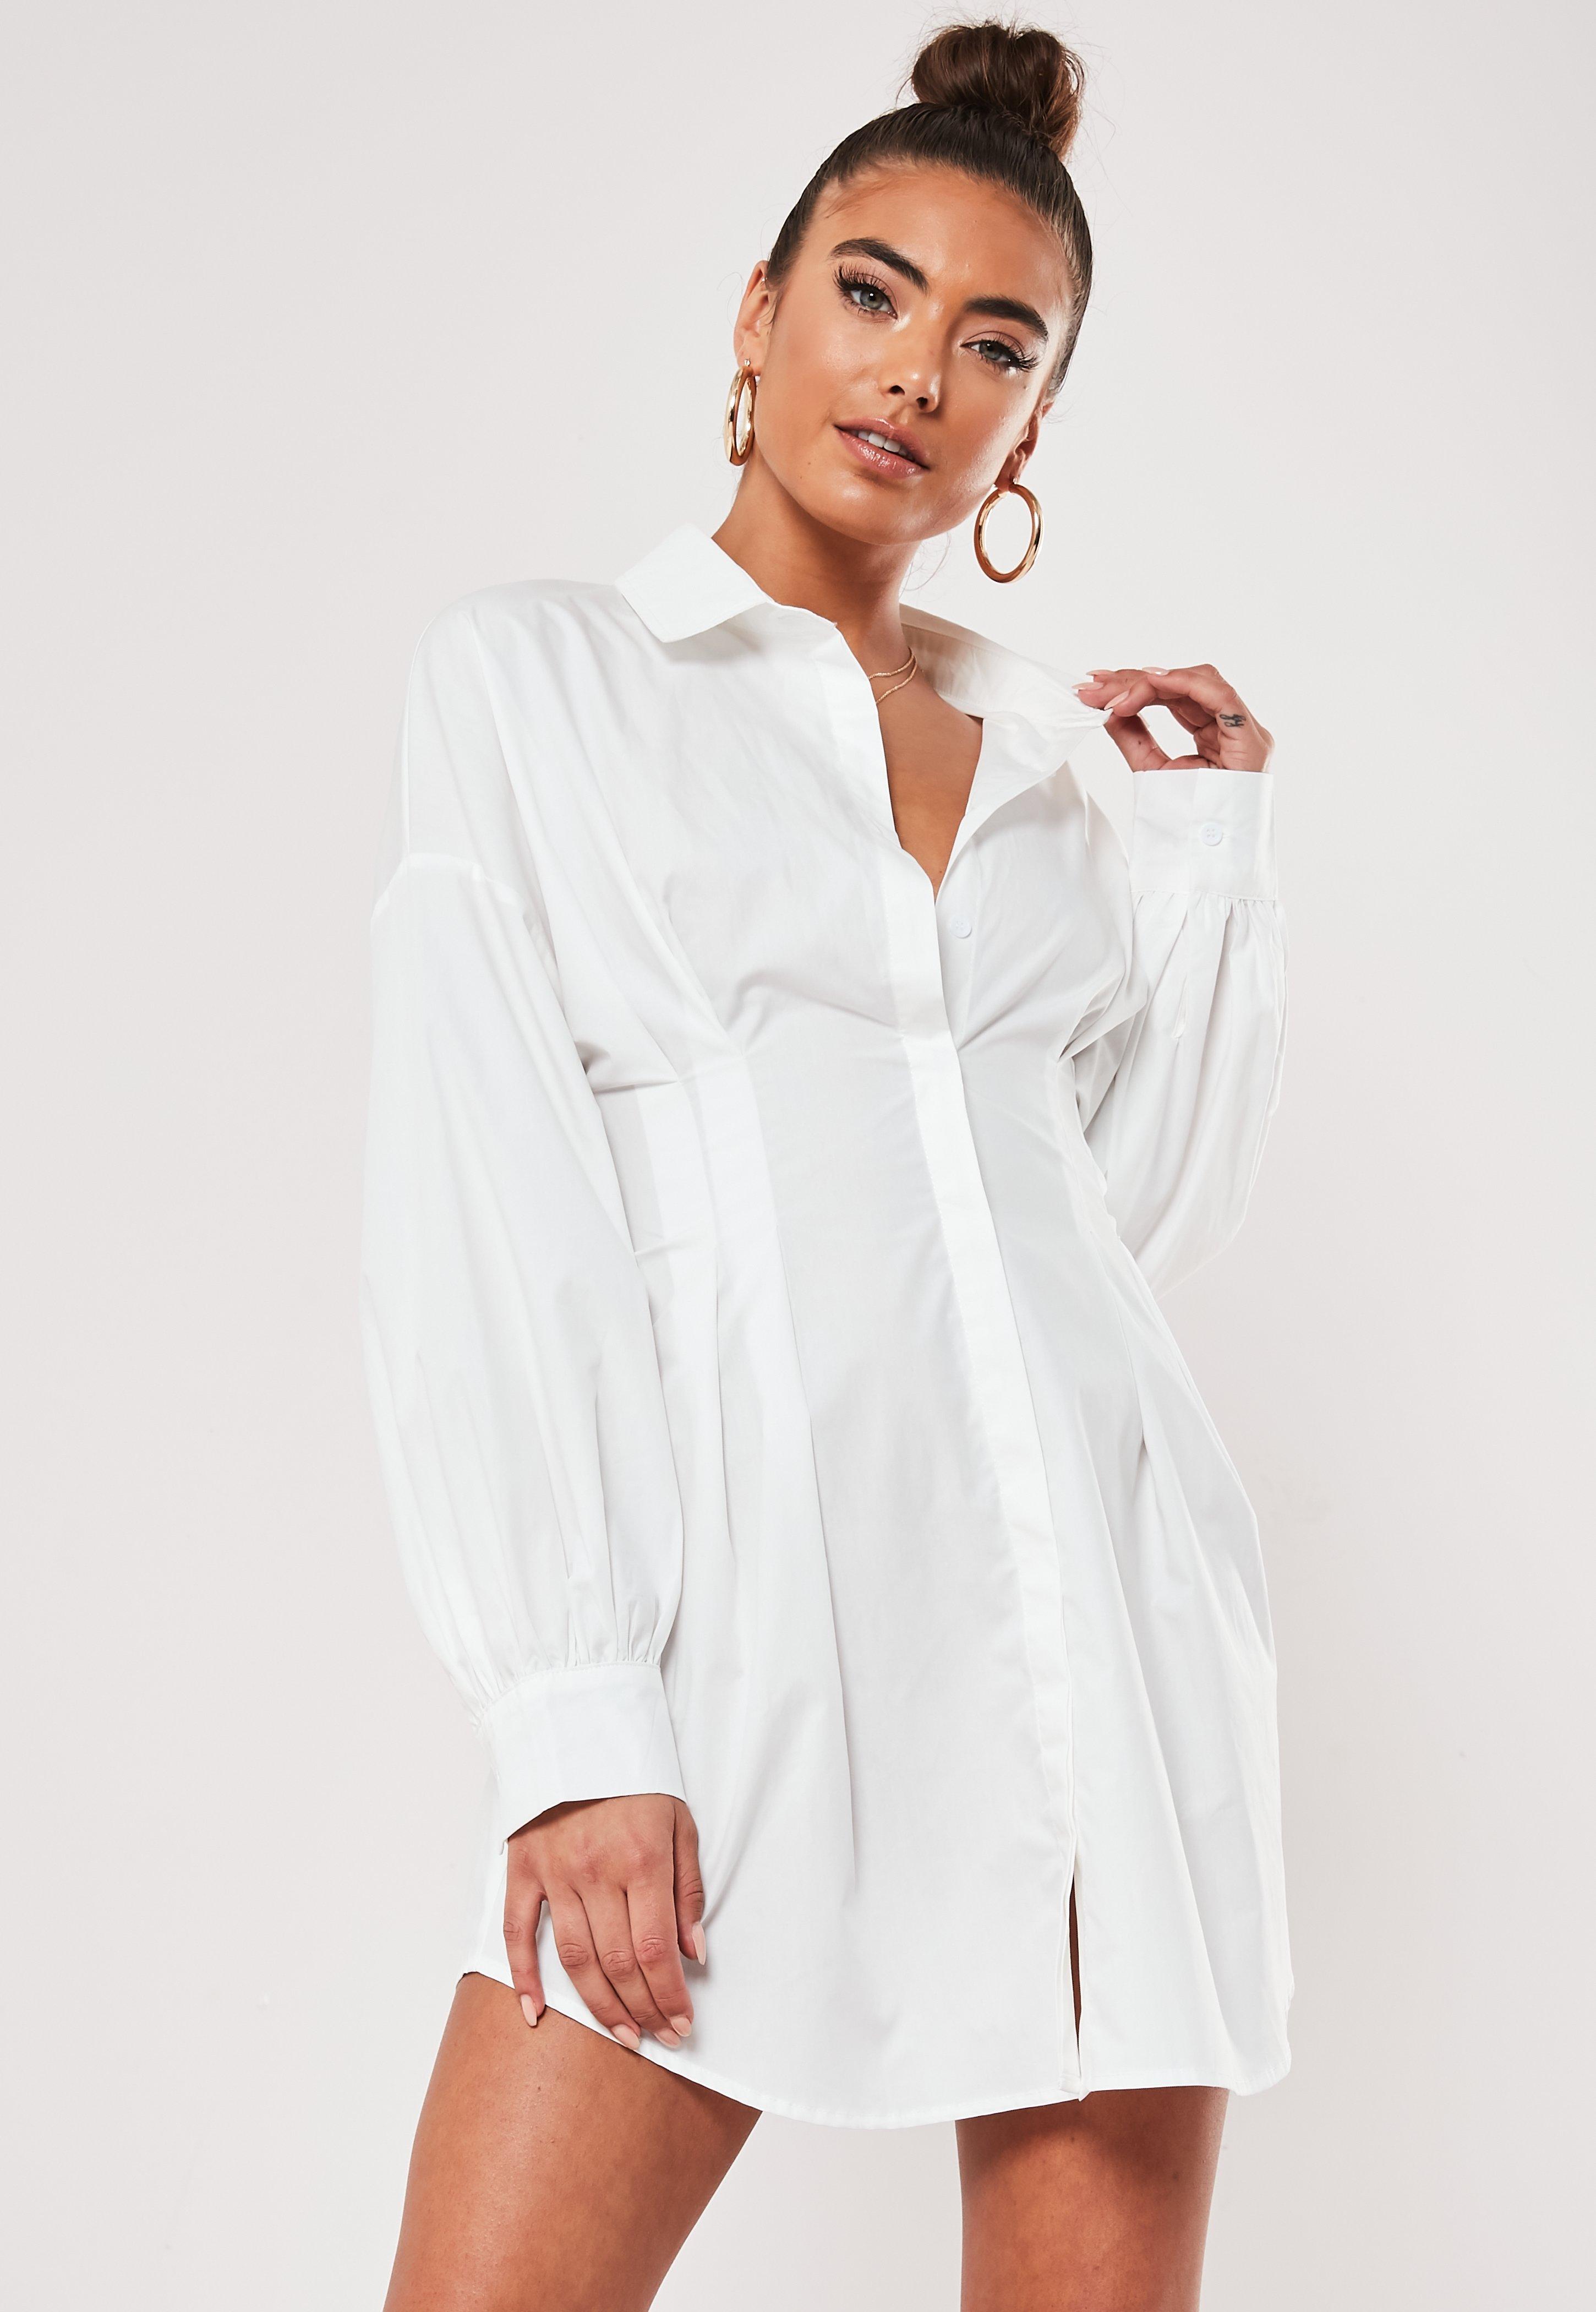 blouse dress white Big sale - OFF 79%